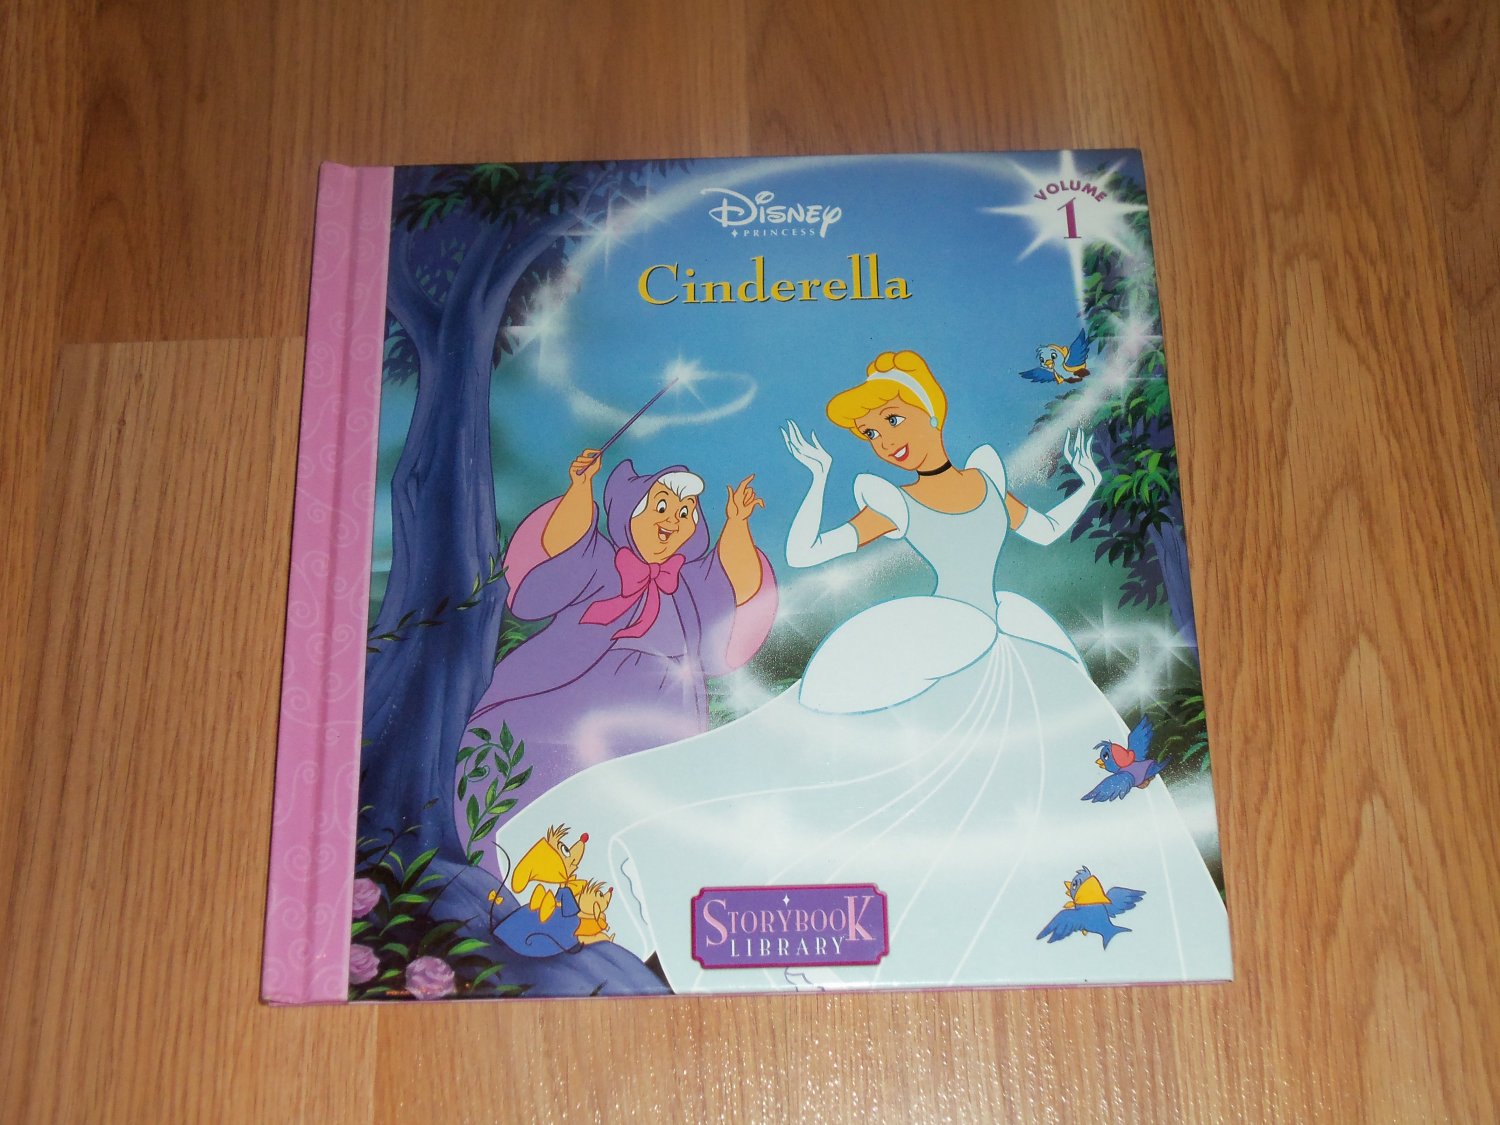 Disney Princess CINDERELLA Storybook Library - Volume 1 - NEW